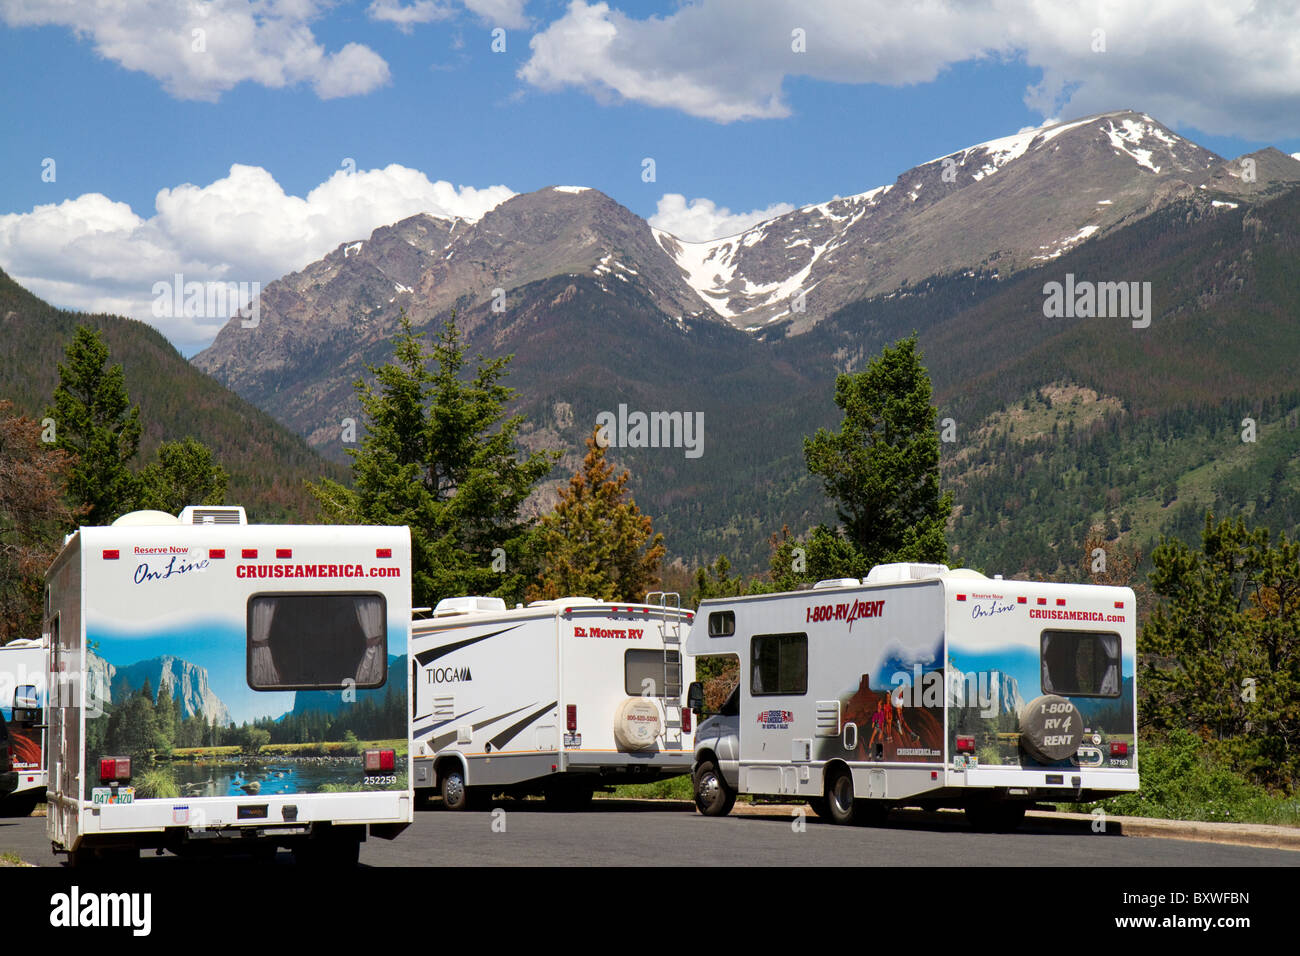 Rental motorhomes in Rocky Mountain National Park, Colorado, USA. Stock Photo